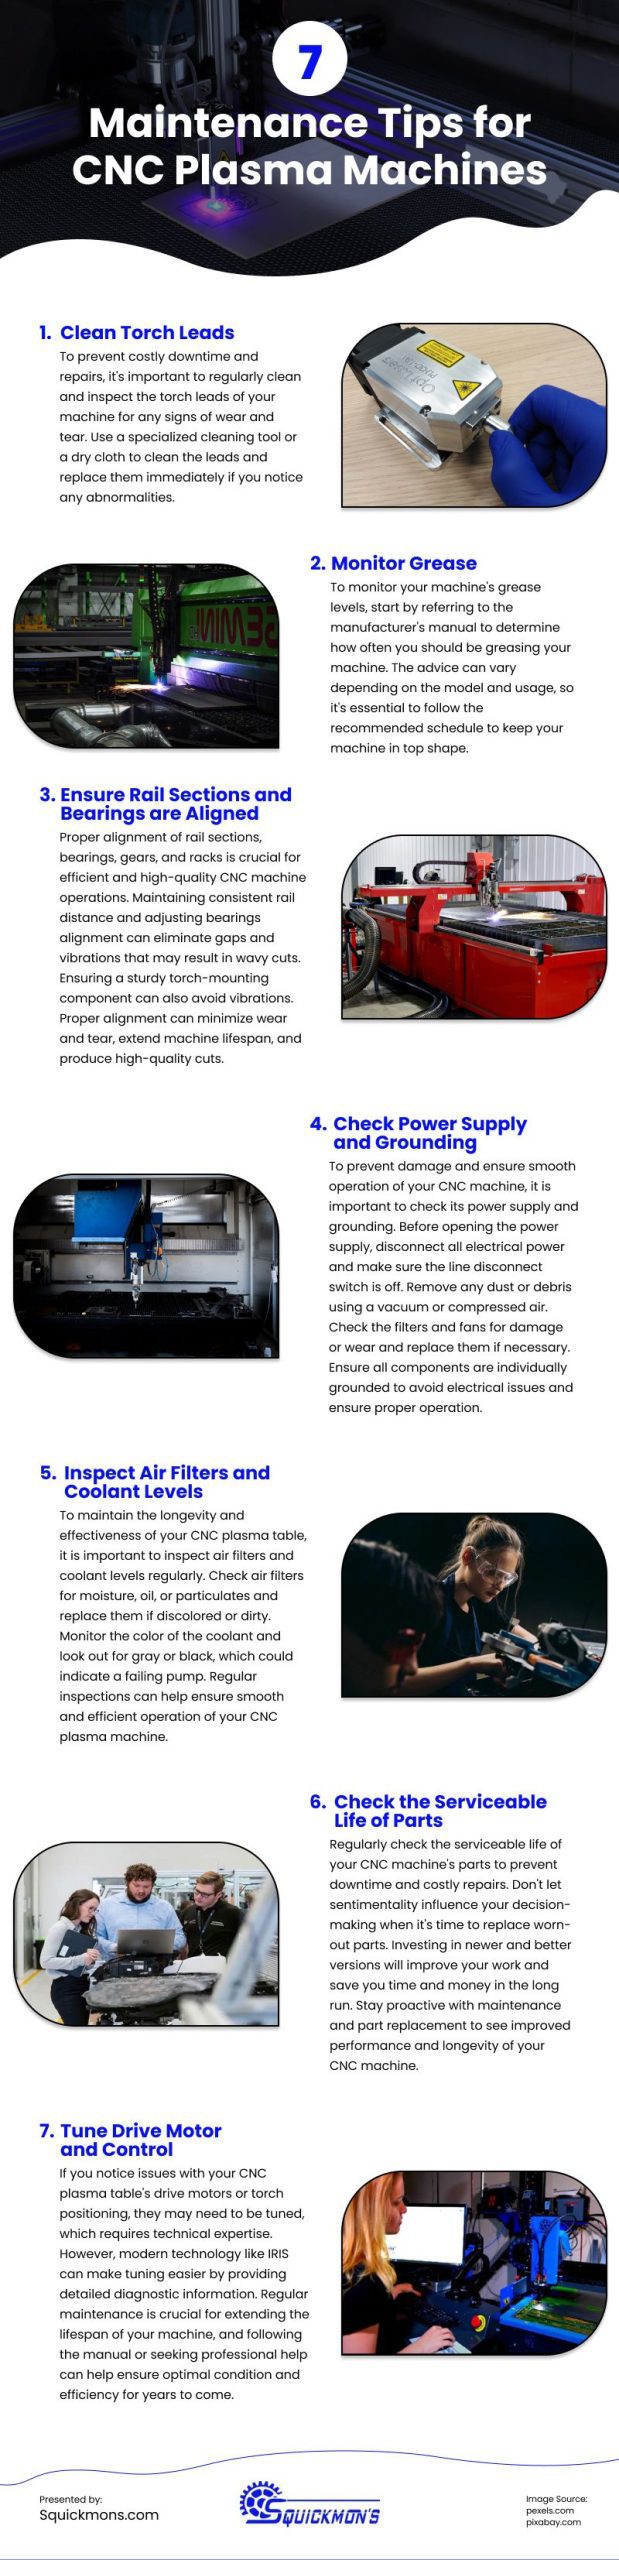 7 Maintenance Tips for CNC Plasma Machines Infographic